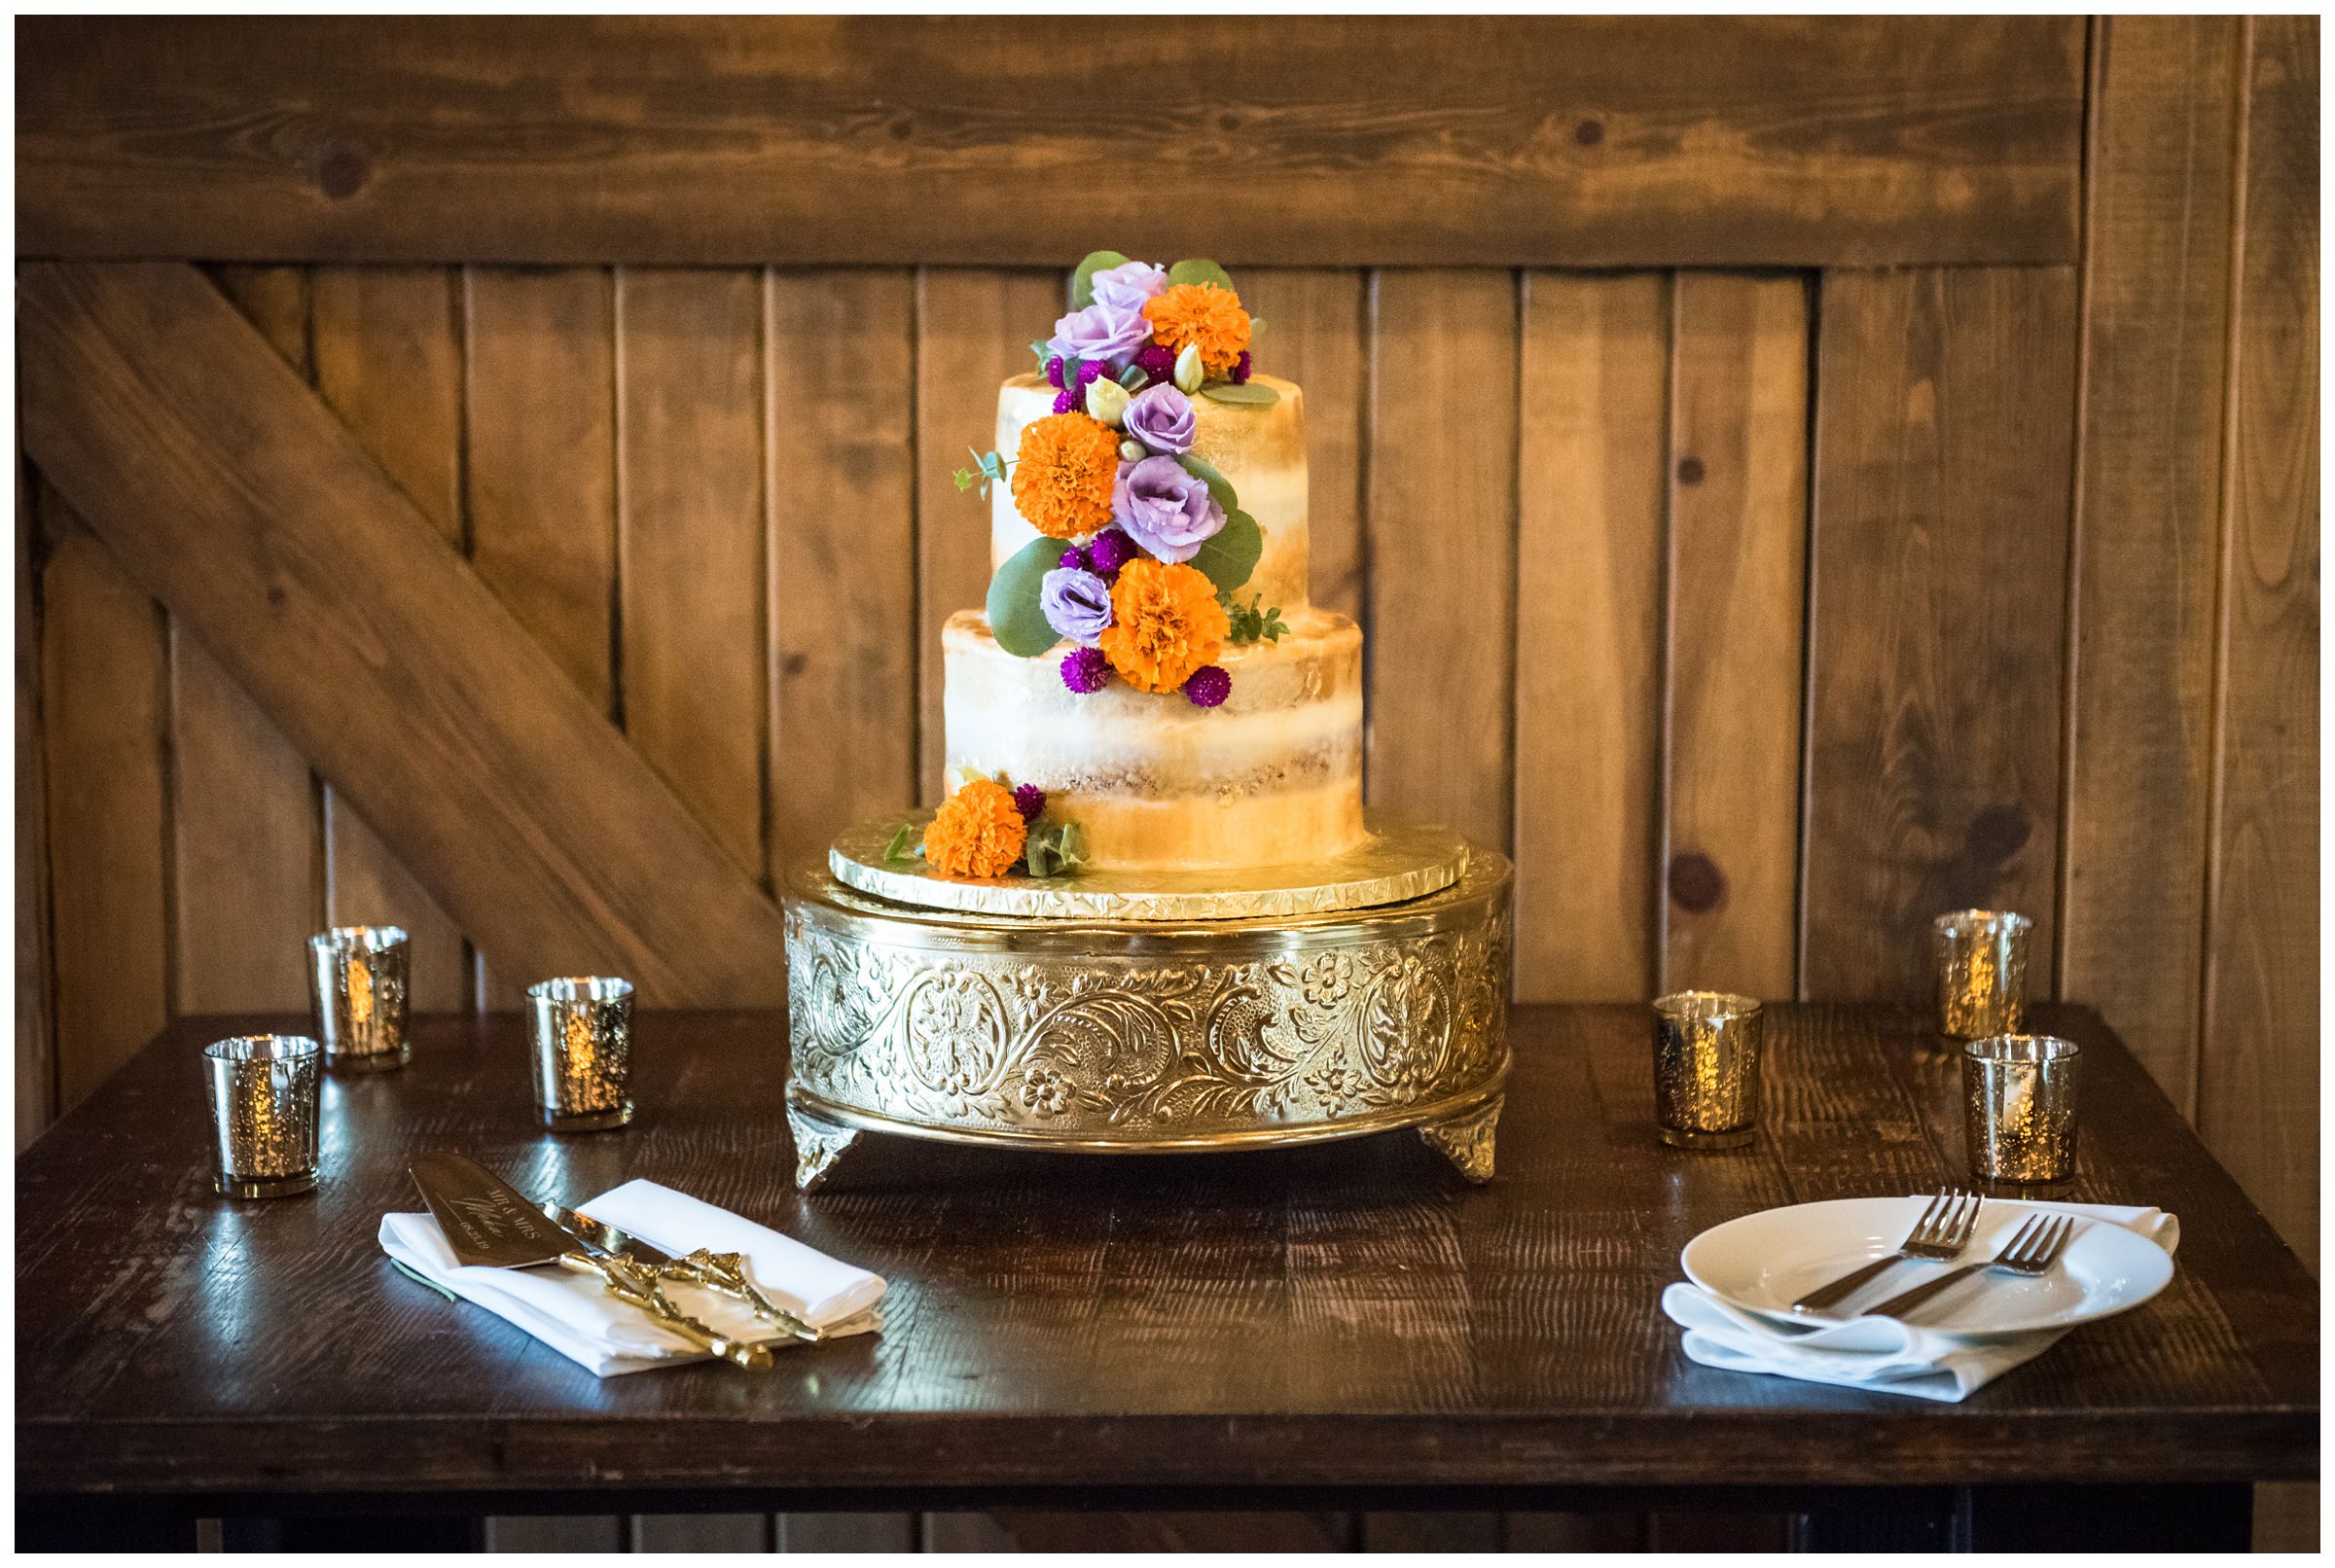 gold wedding cake with orange and purple flowers including Indian wedding flower marigolds